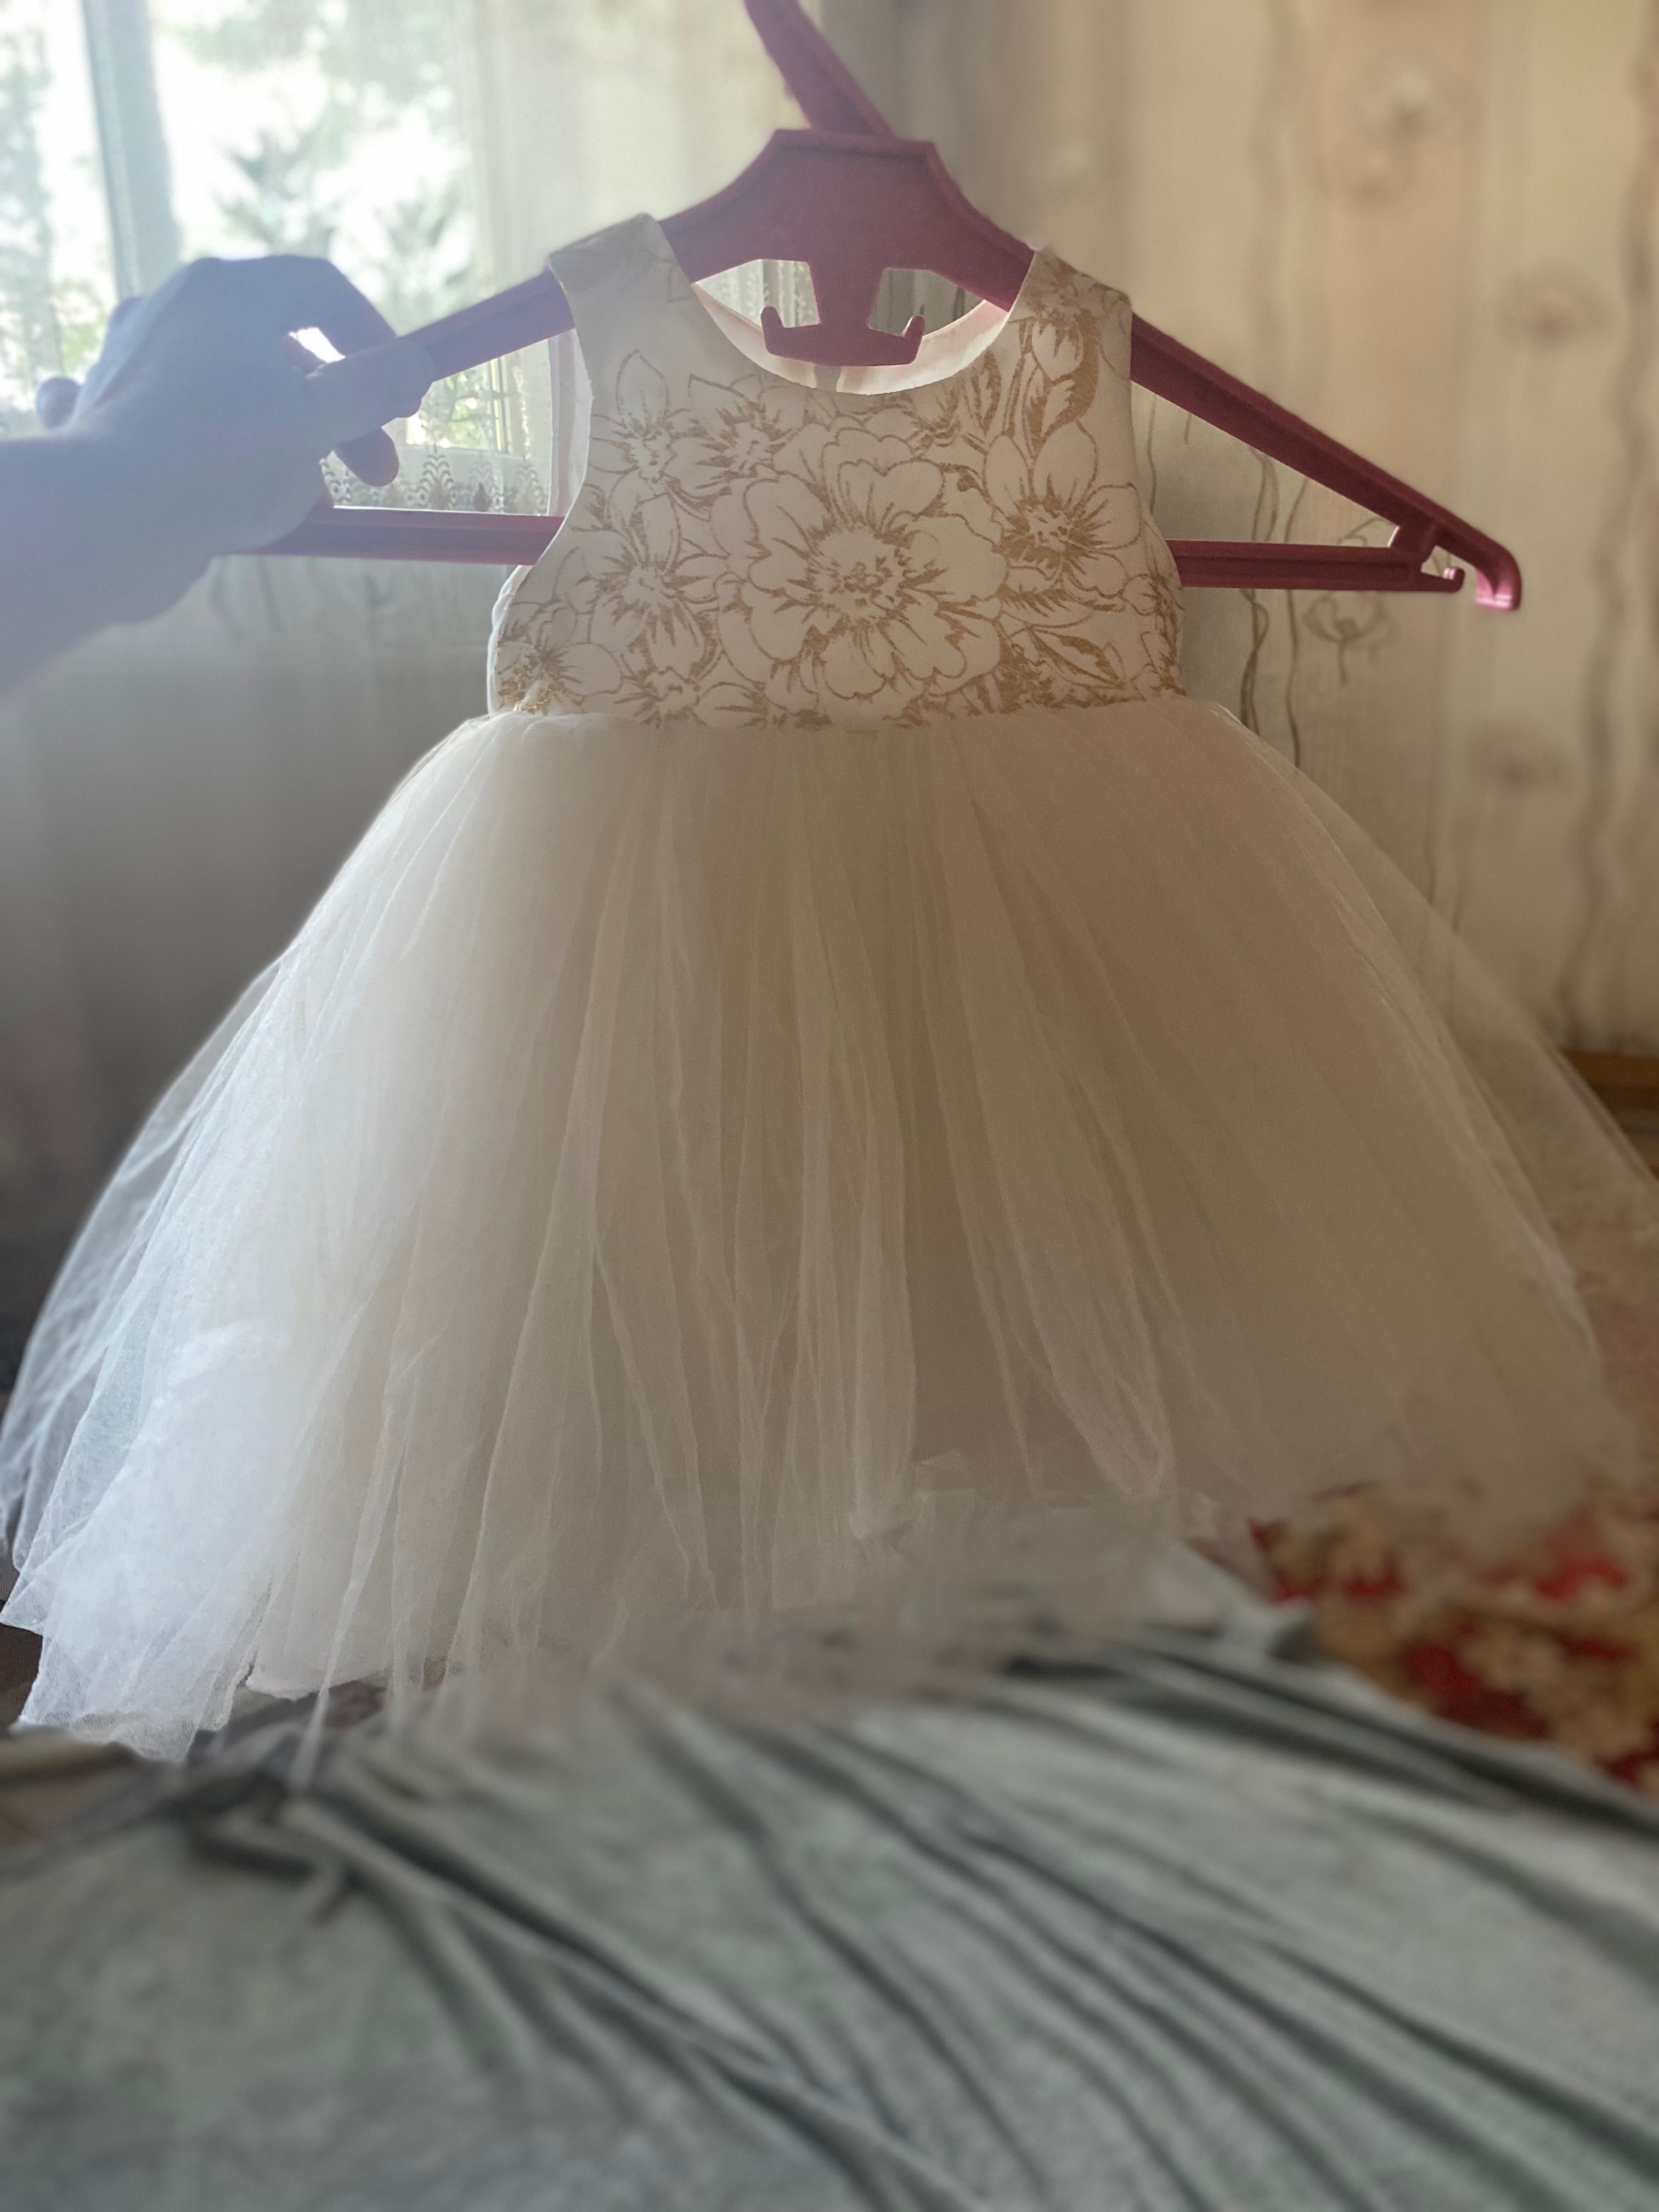 Сукня для маленької принцеси